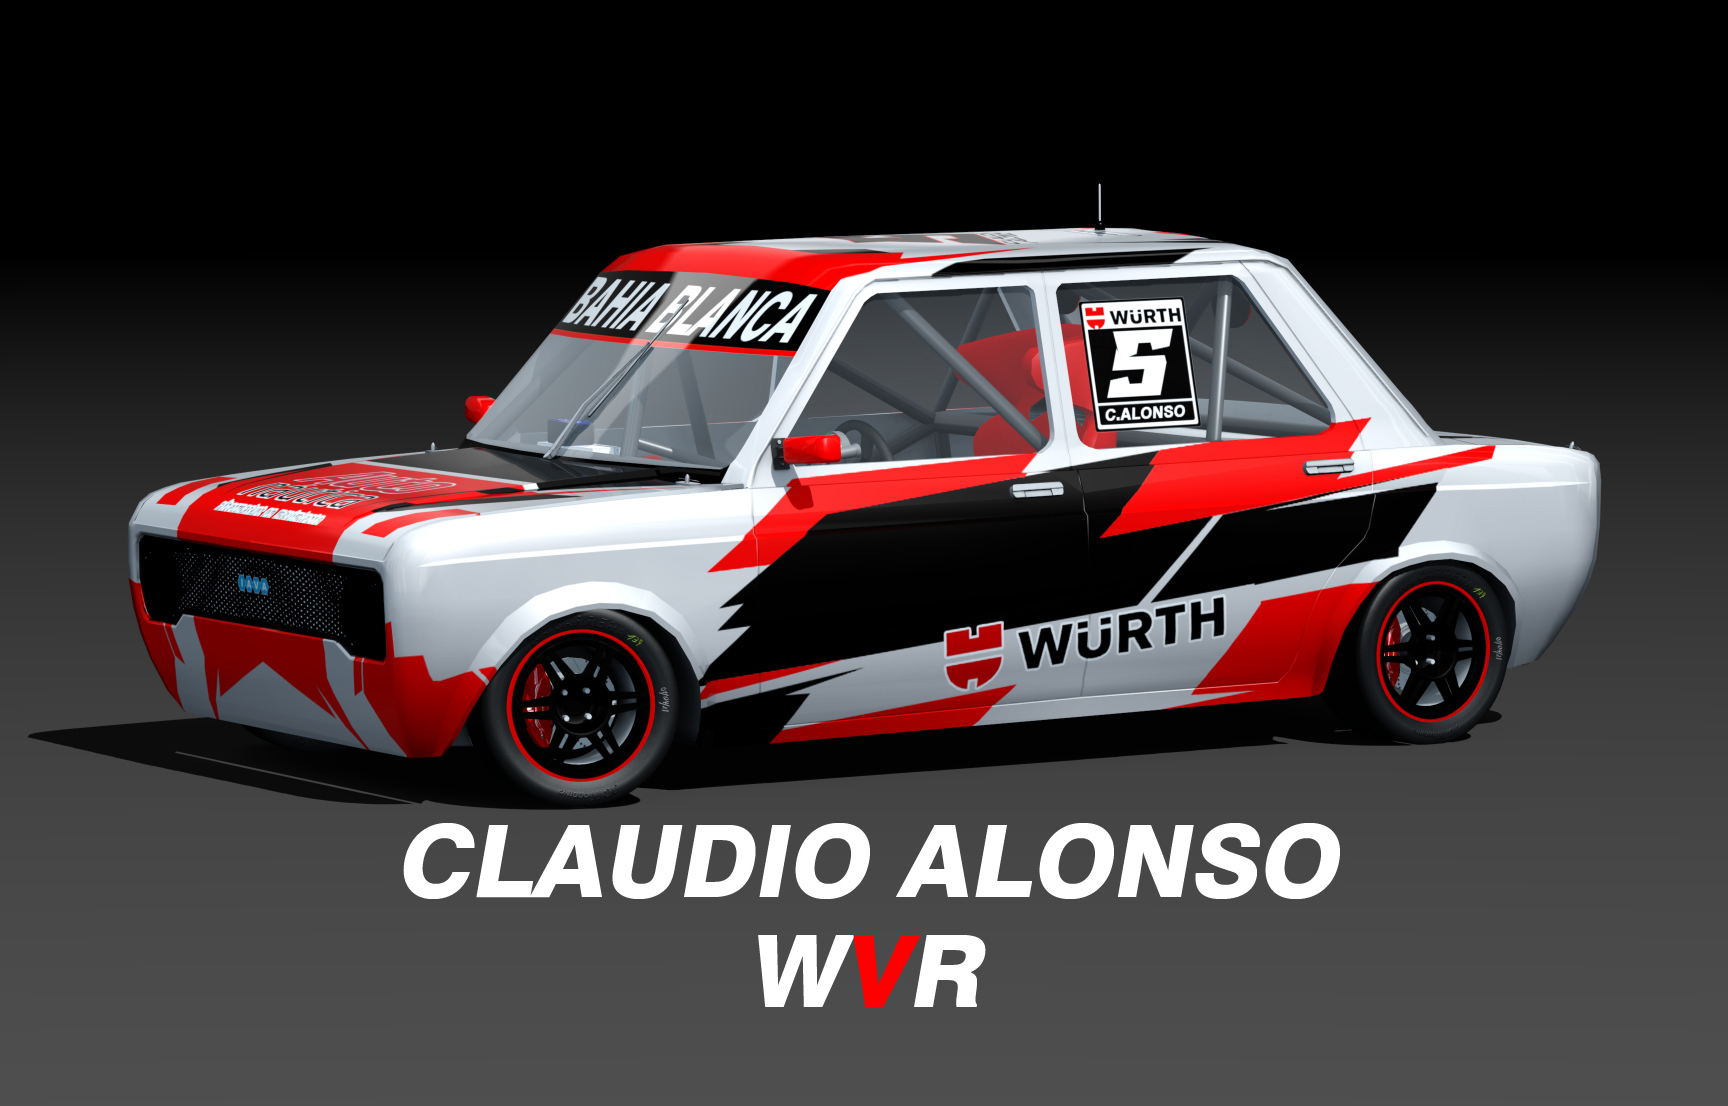 WVR Turismo 1.4 FIAT 128, skin claudio alonso